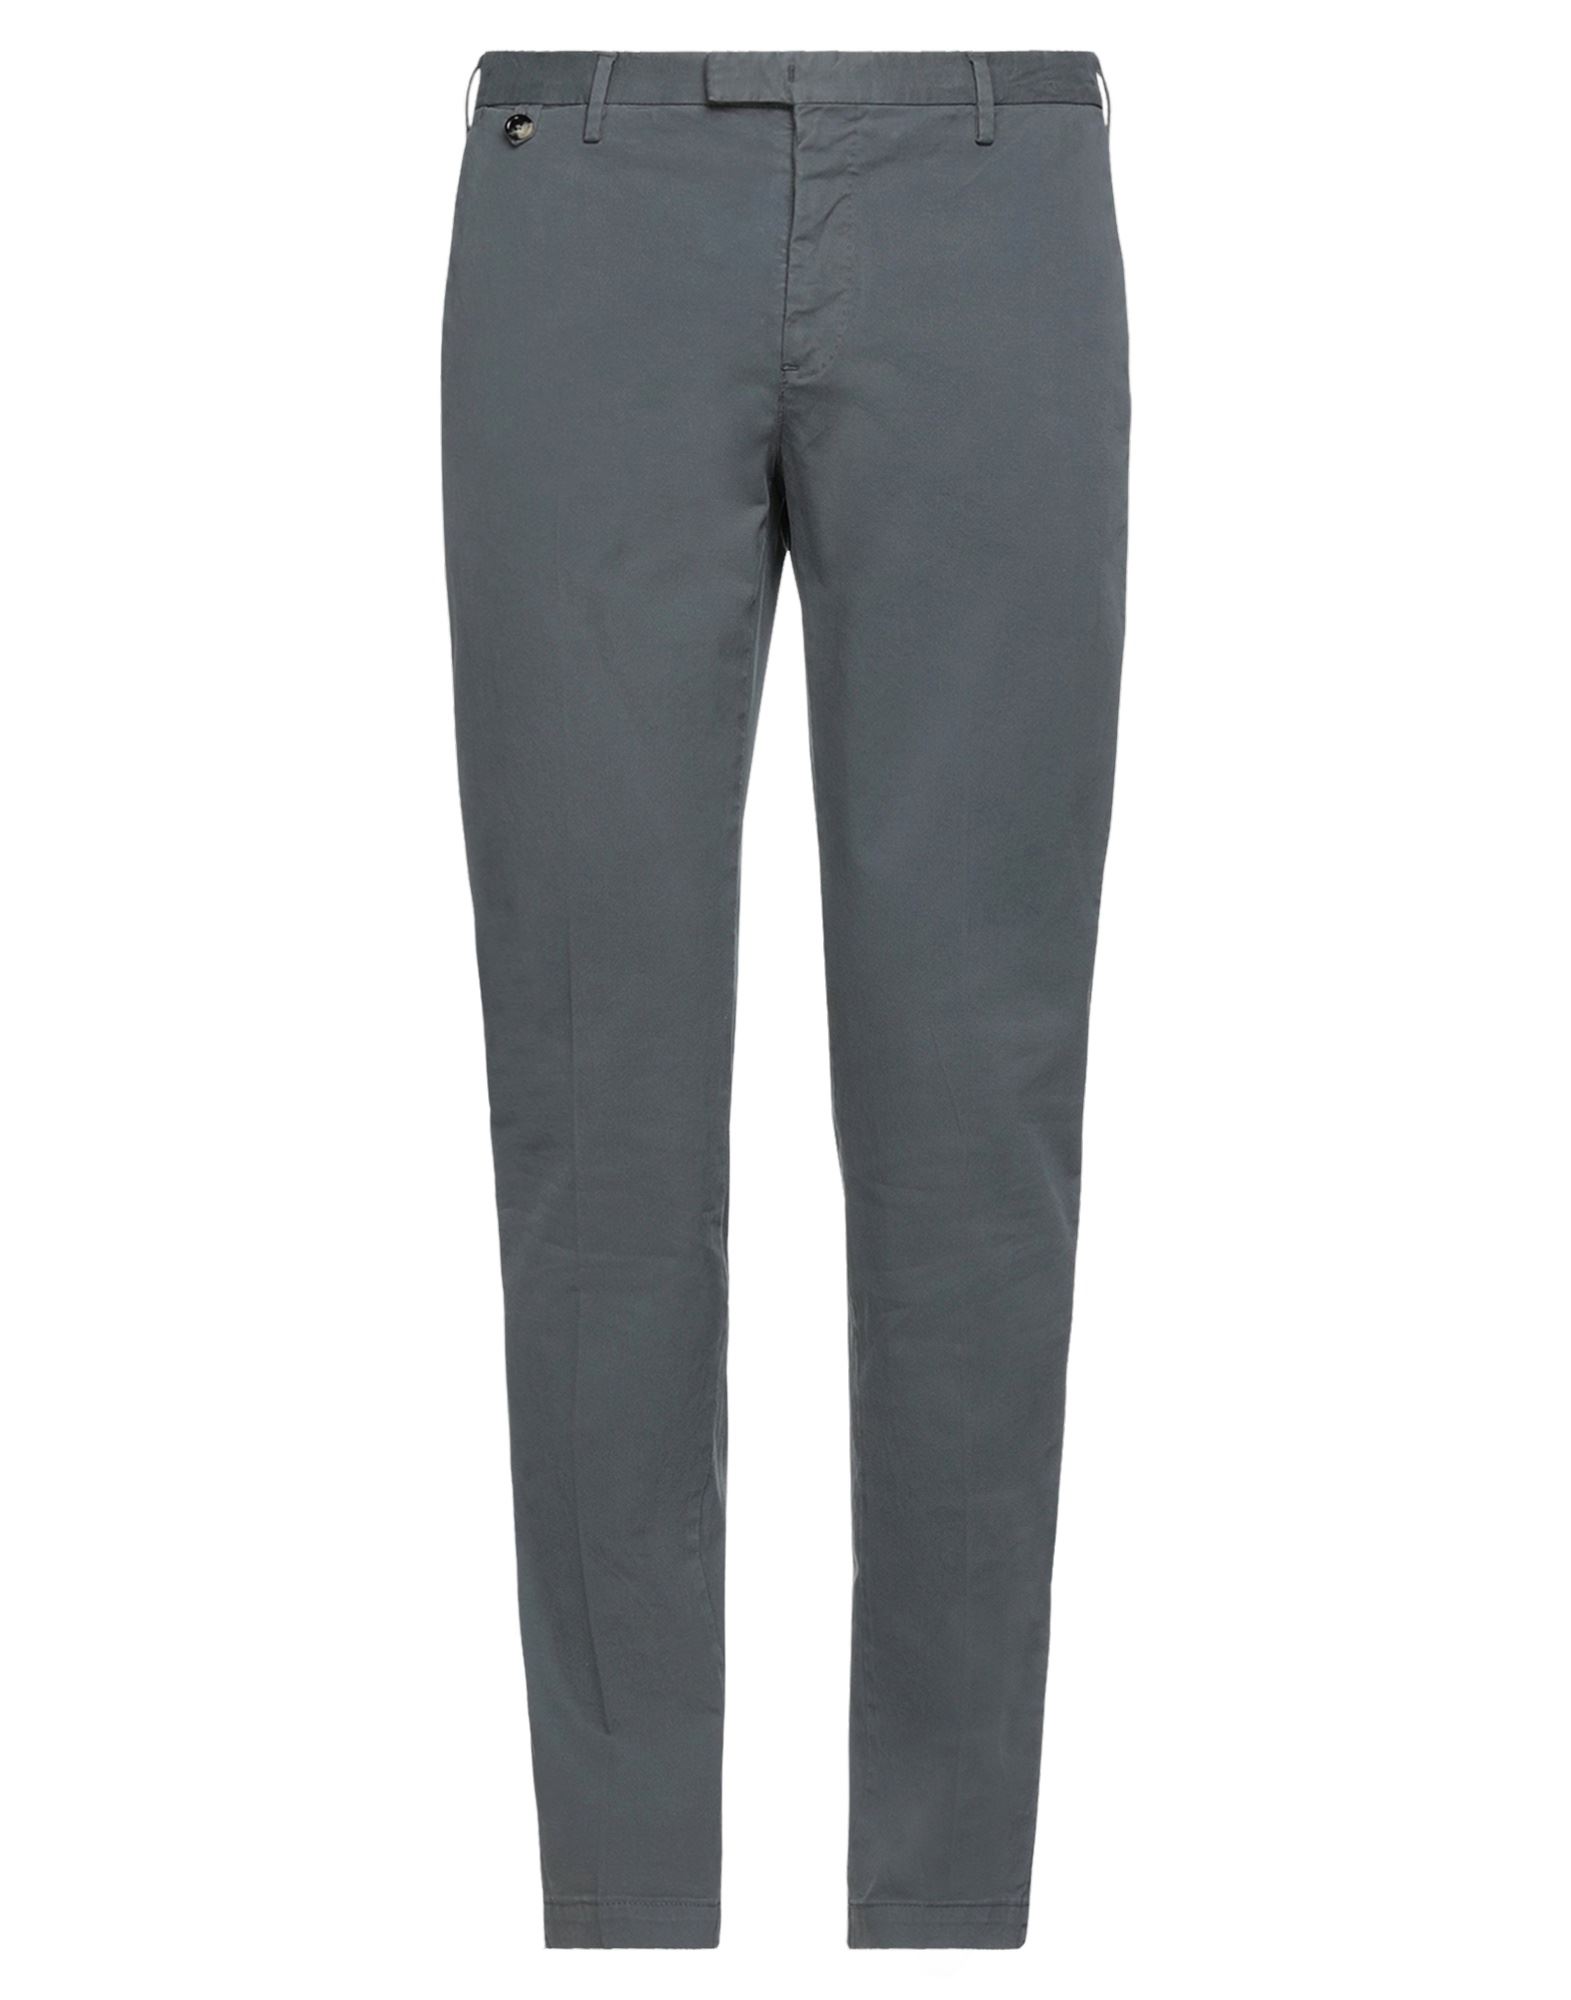 40/56 PT Pantaloni Torino New Gray Solid Pants Extra Slim